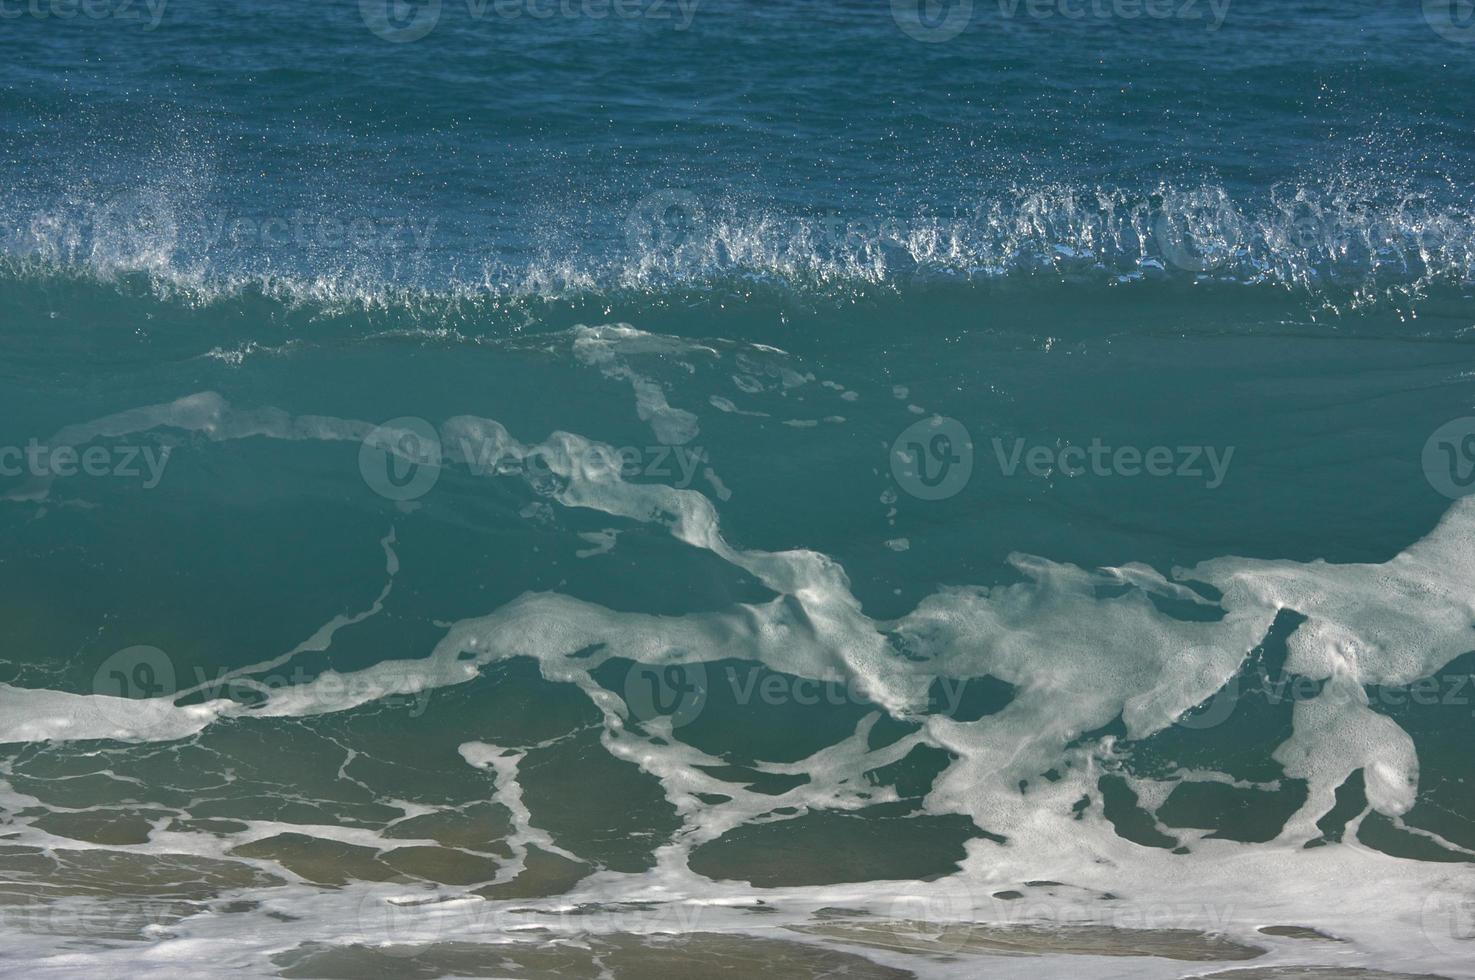 Dramatic Shorebreak Wave photo